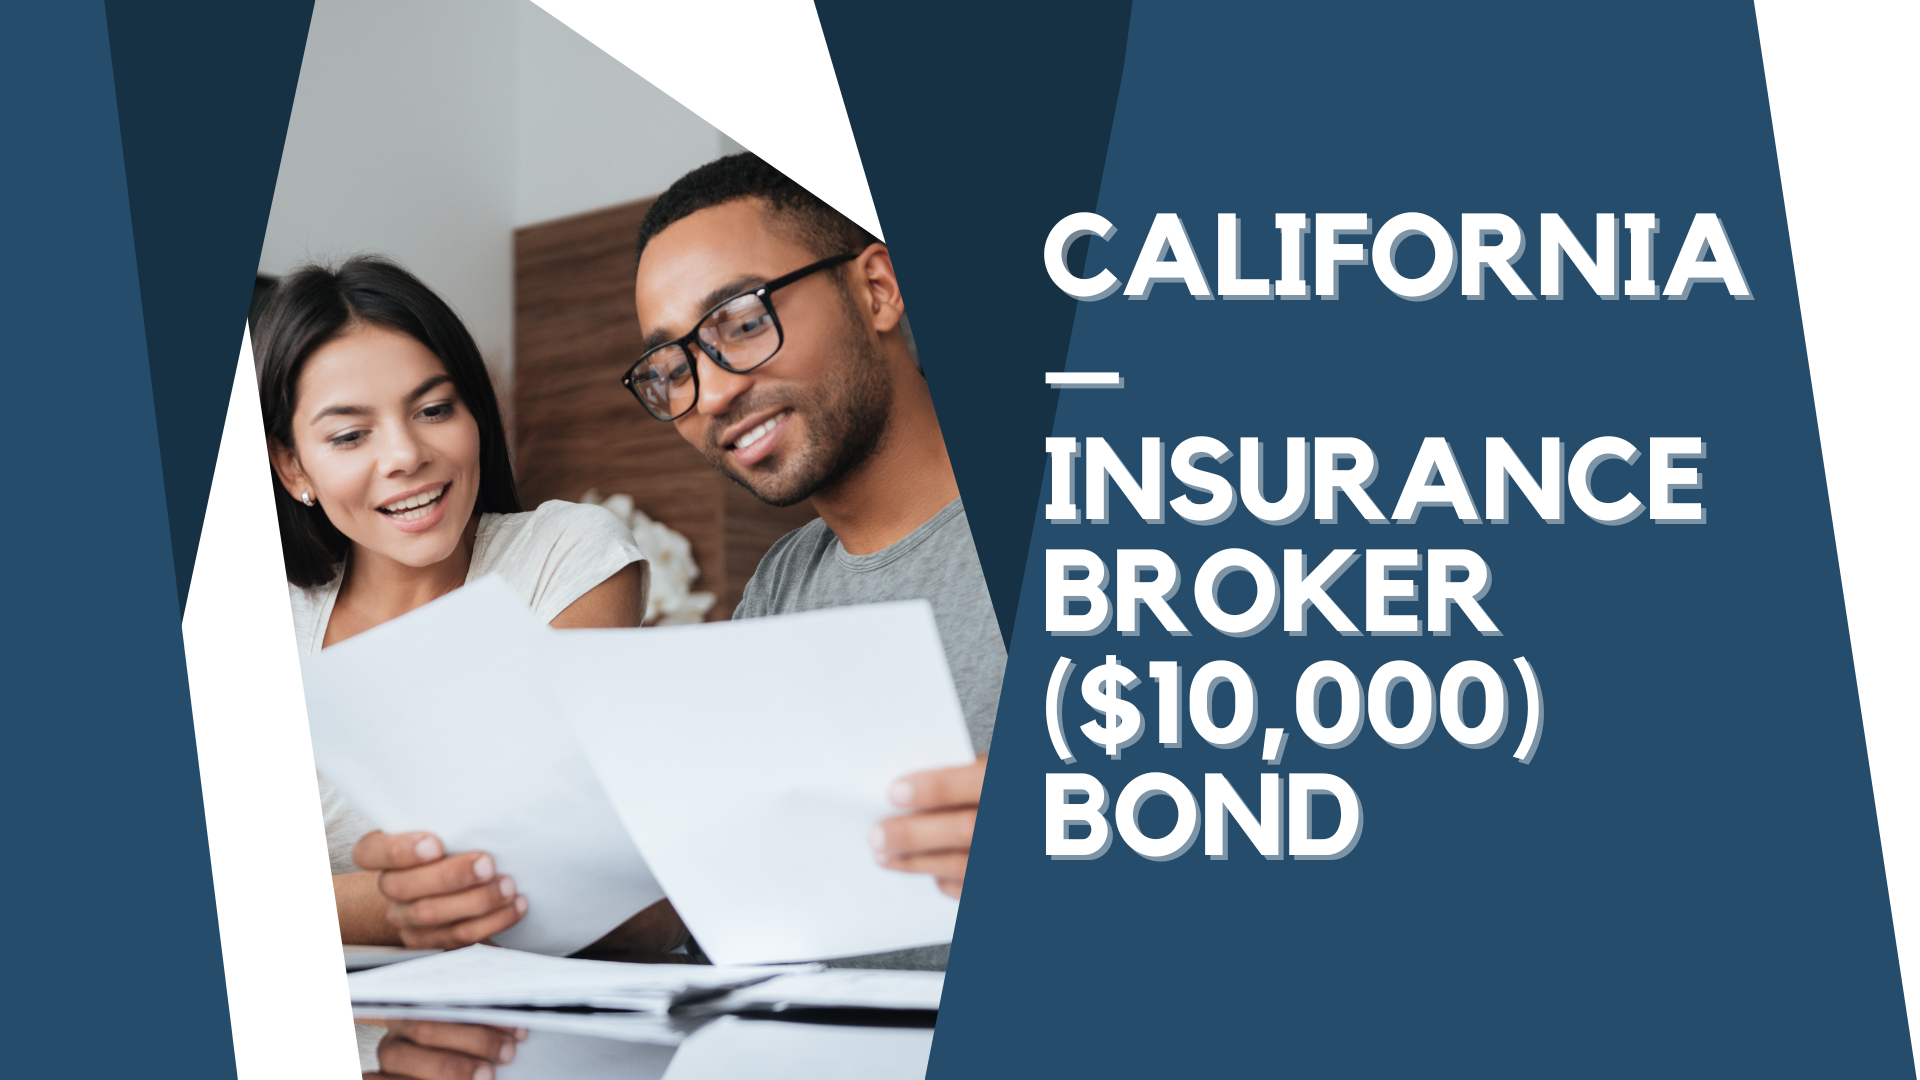 Surety Bond - California – Insurance Broker ($10,000) Bond